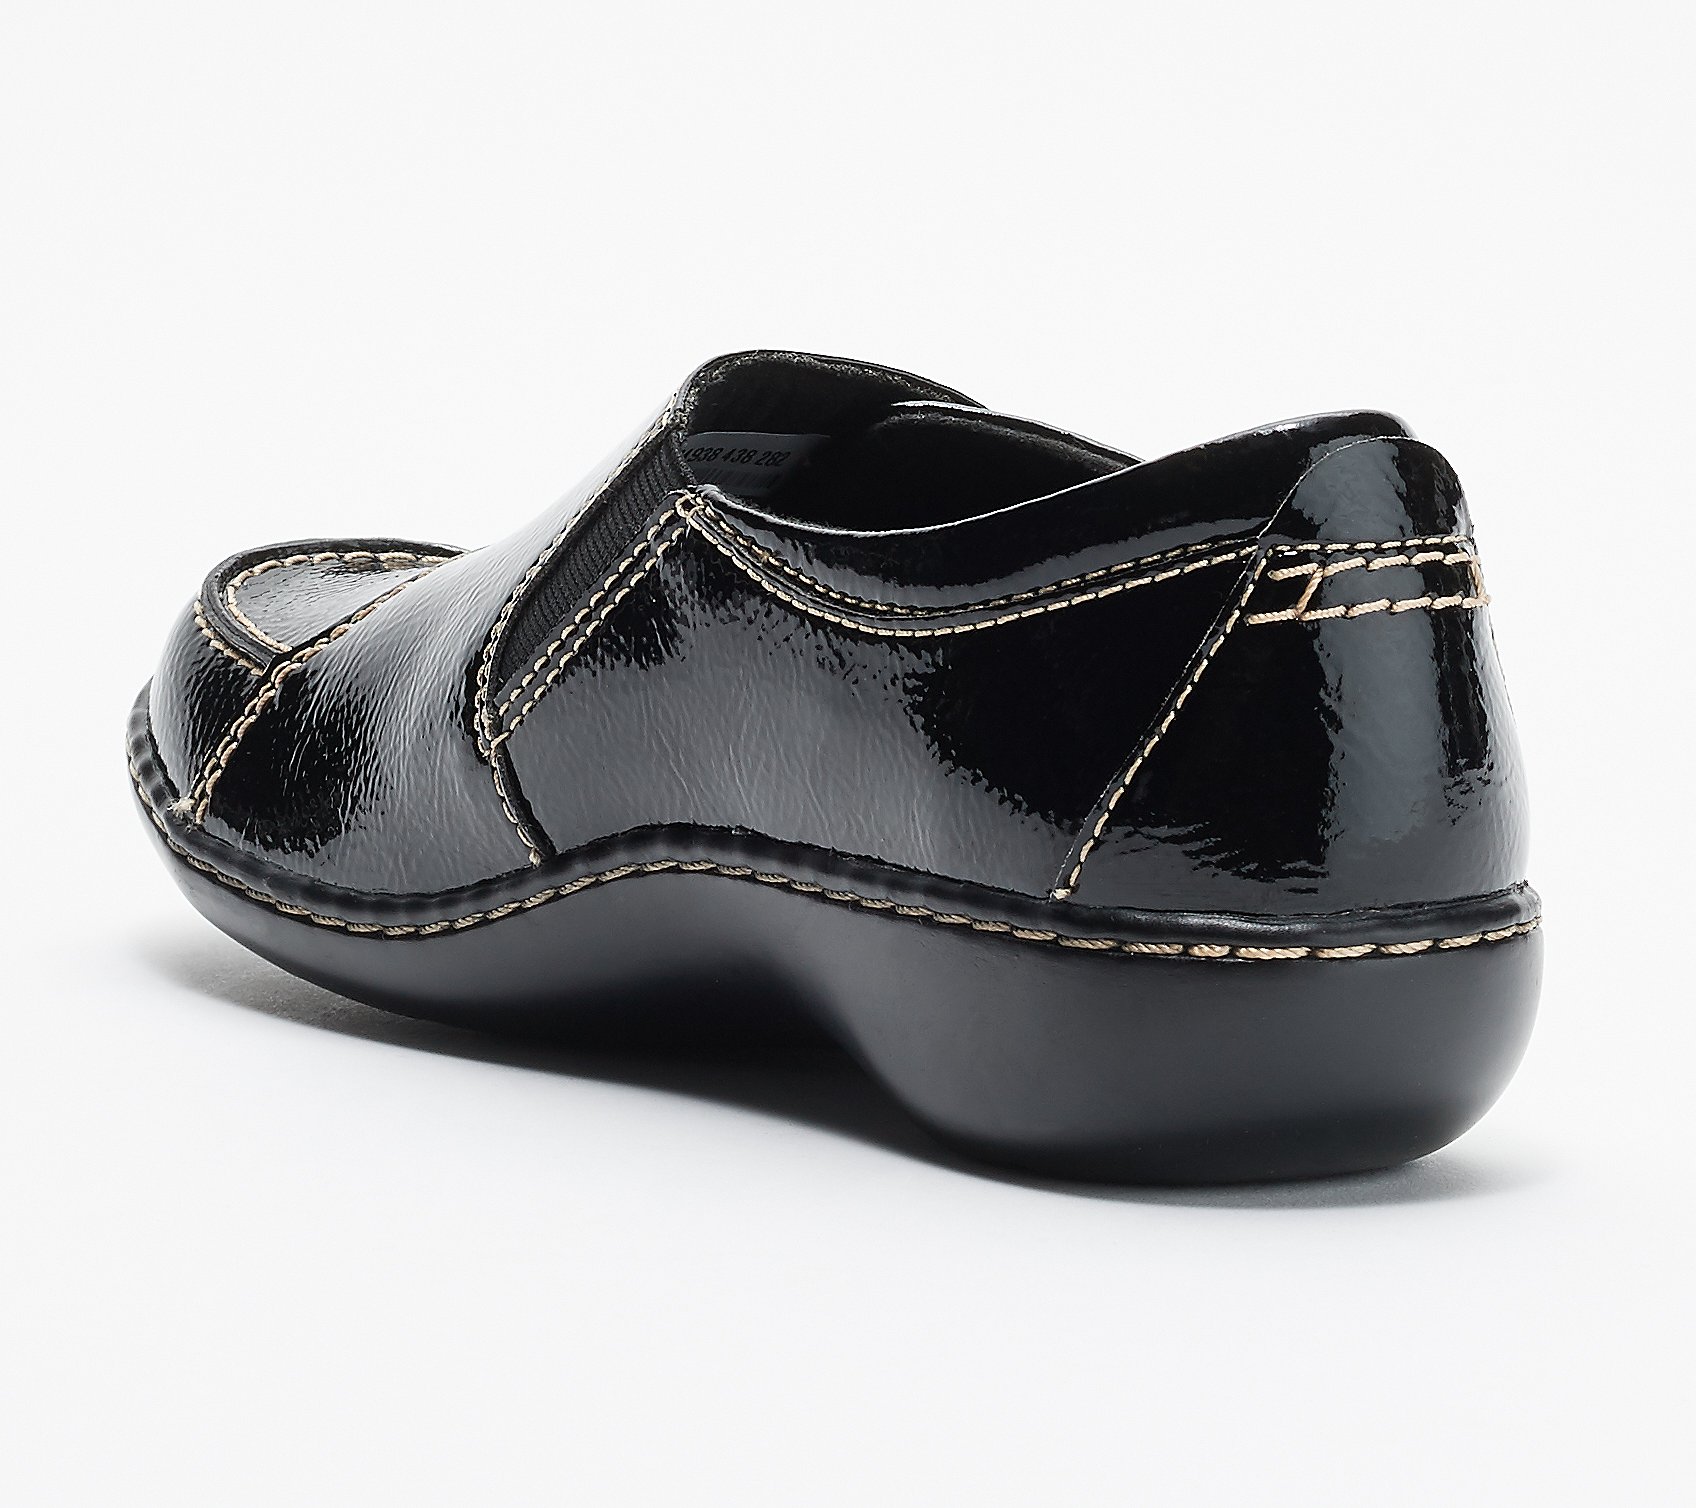 Clarks Collection Leather Slip-on Shoes Ashland Lane - QVC.com